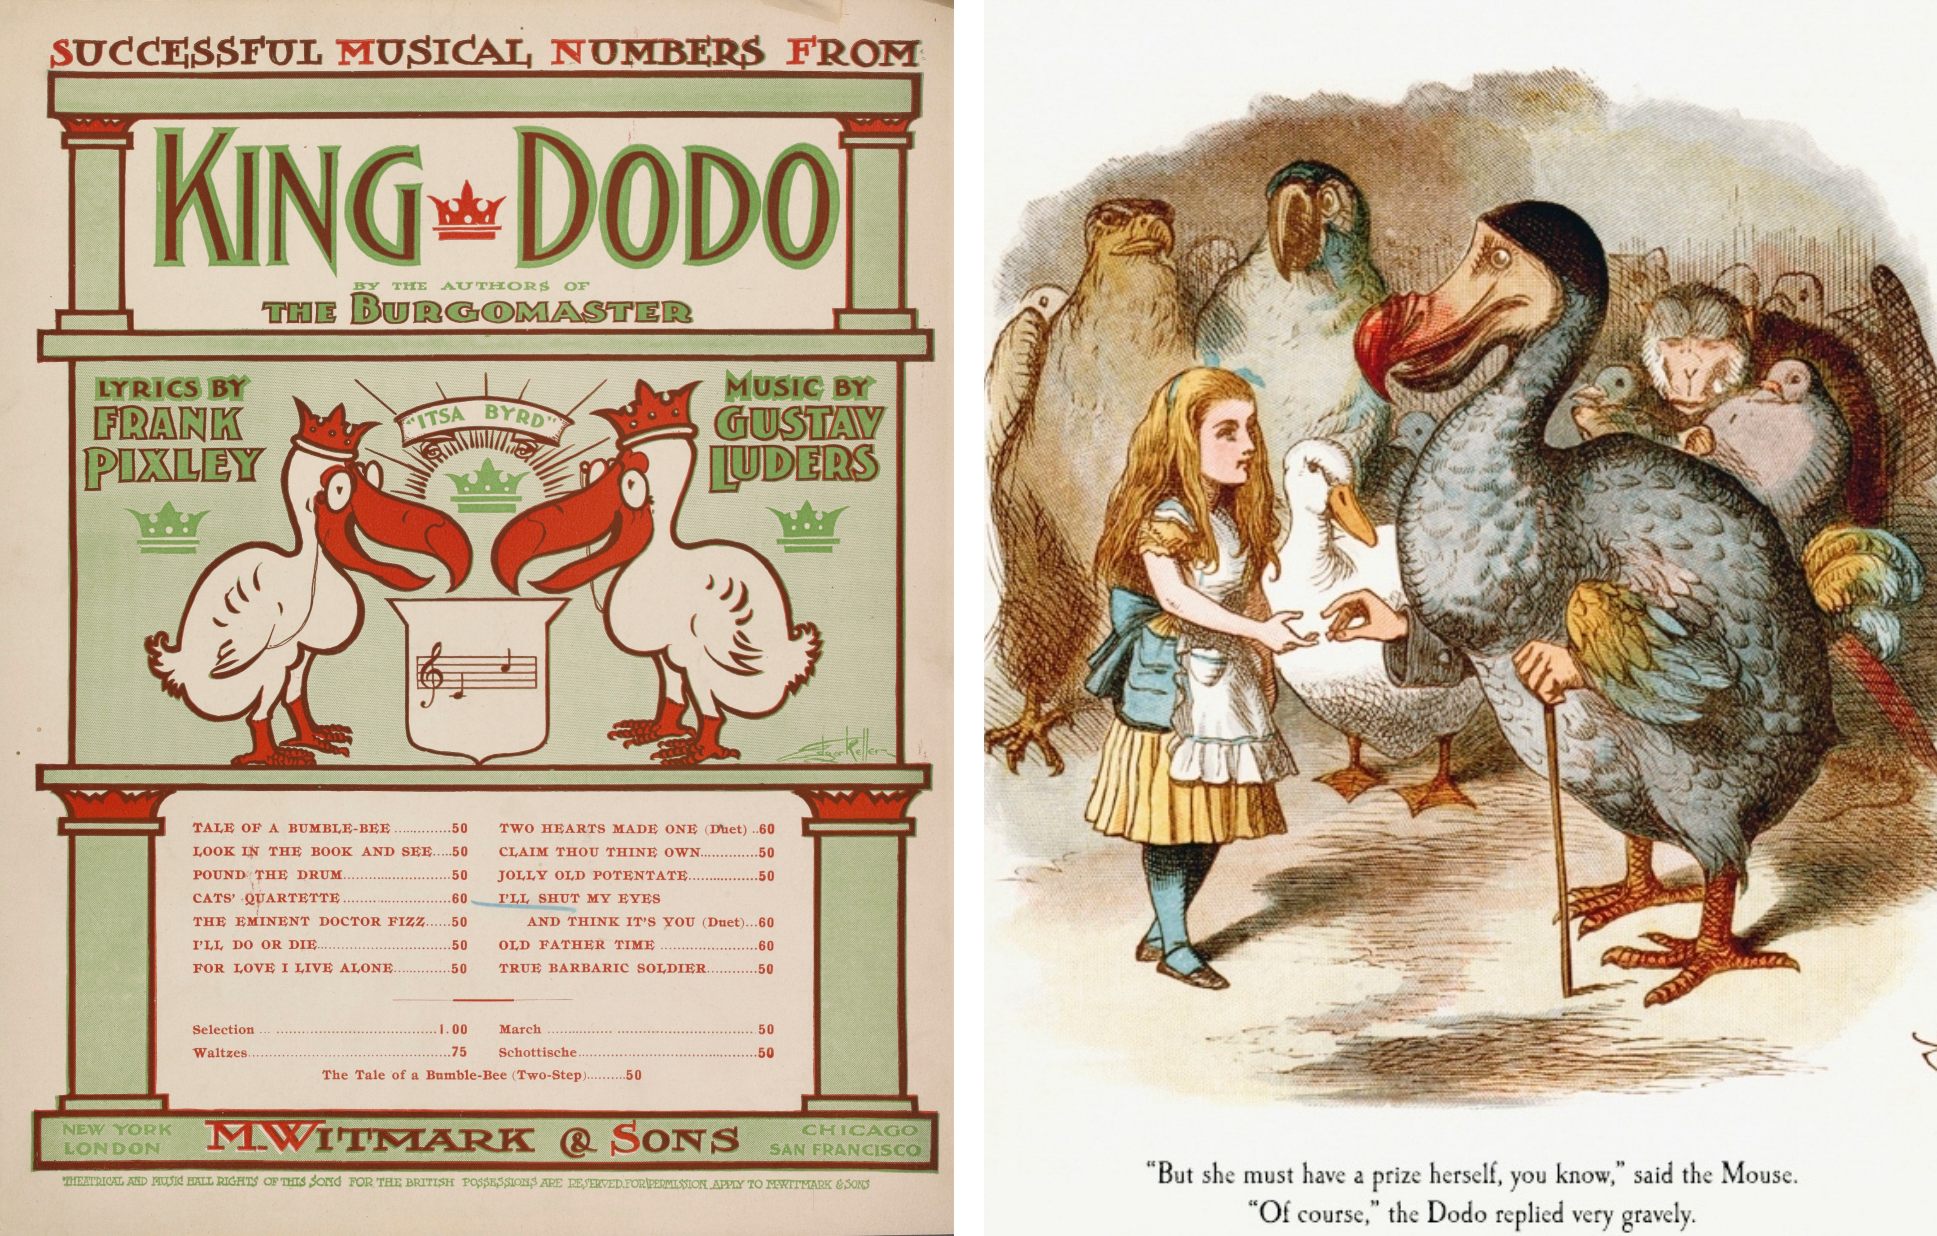 Natural history museum-Dodo-Extinct-Bird Poster